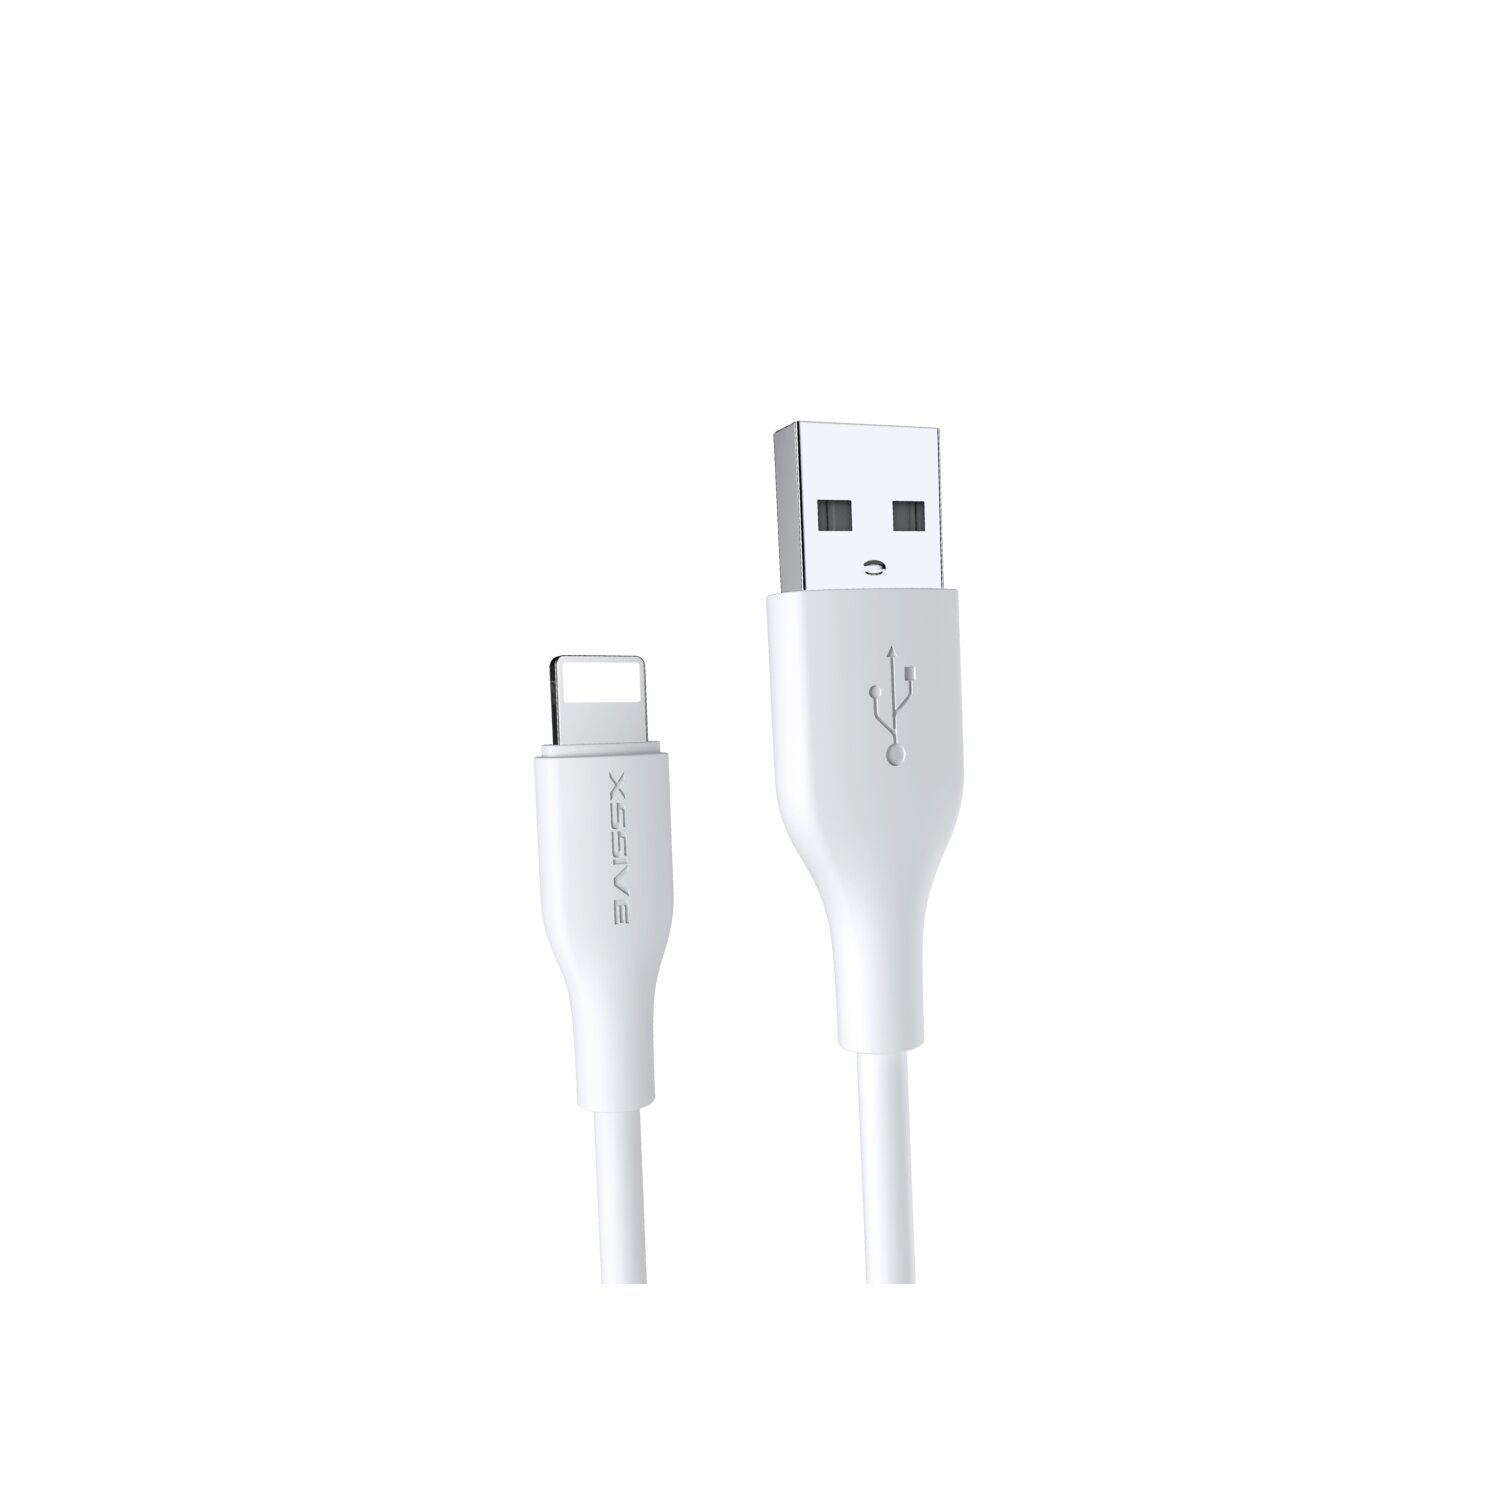 COFI iOS, 2 Ladekabel, Weiß USB Meter 2.4A zu